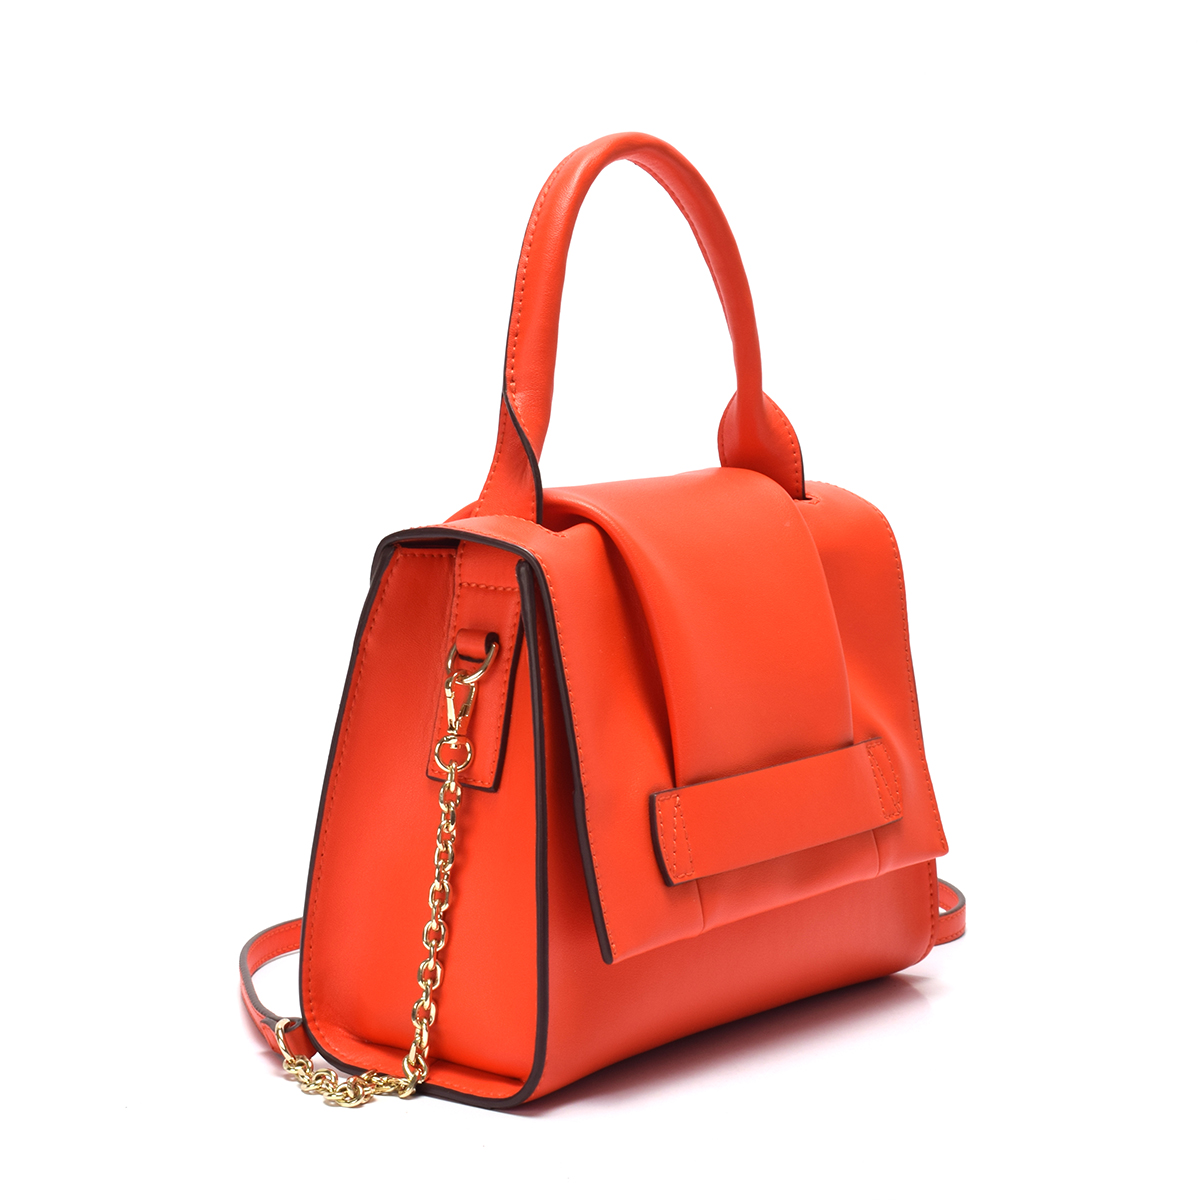 Sanlly bags best leather handbags bulk production for girls-1